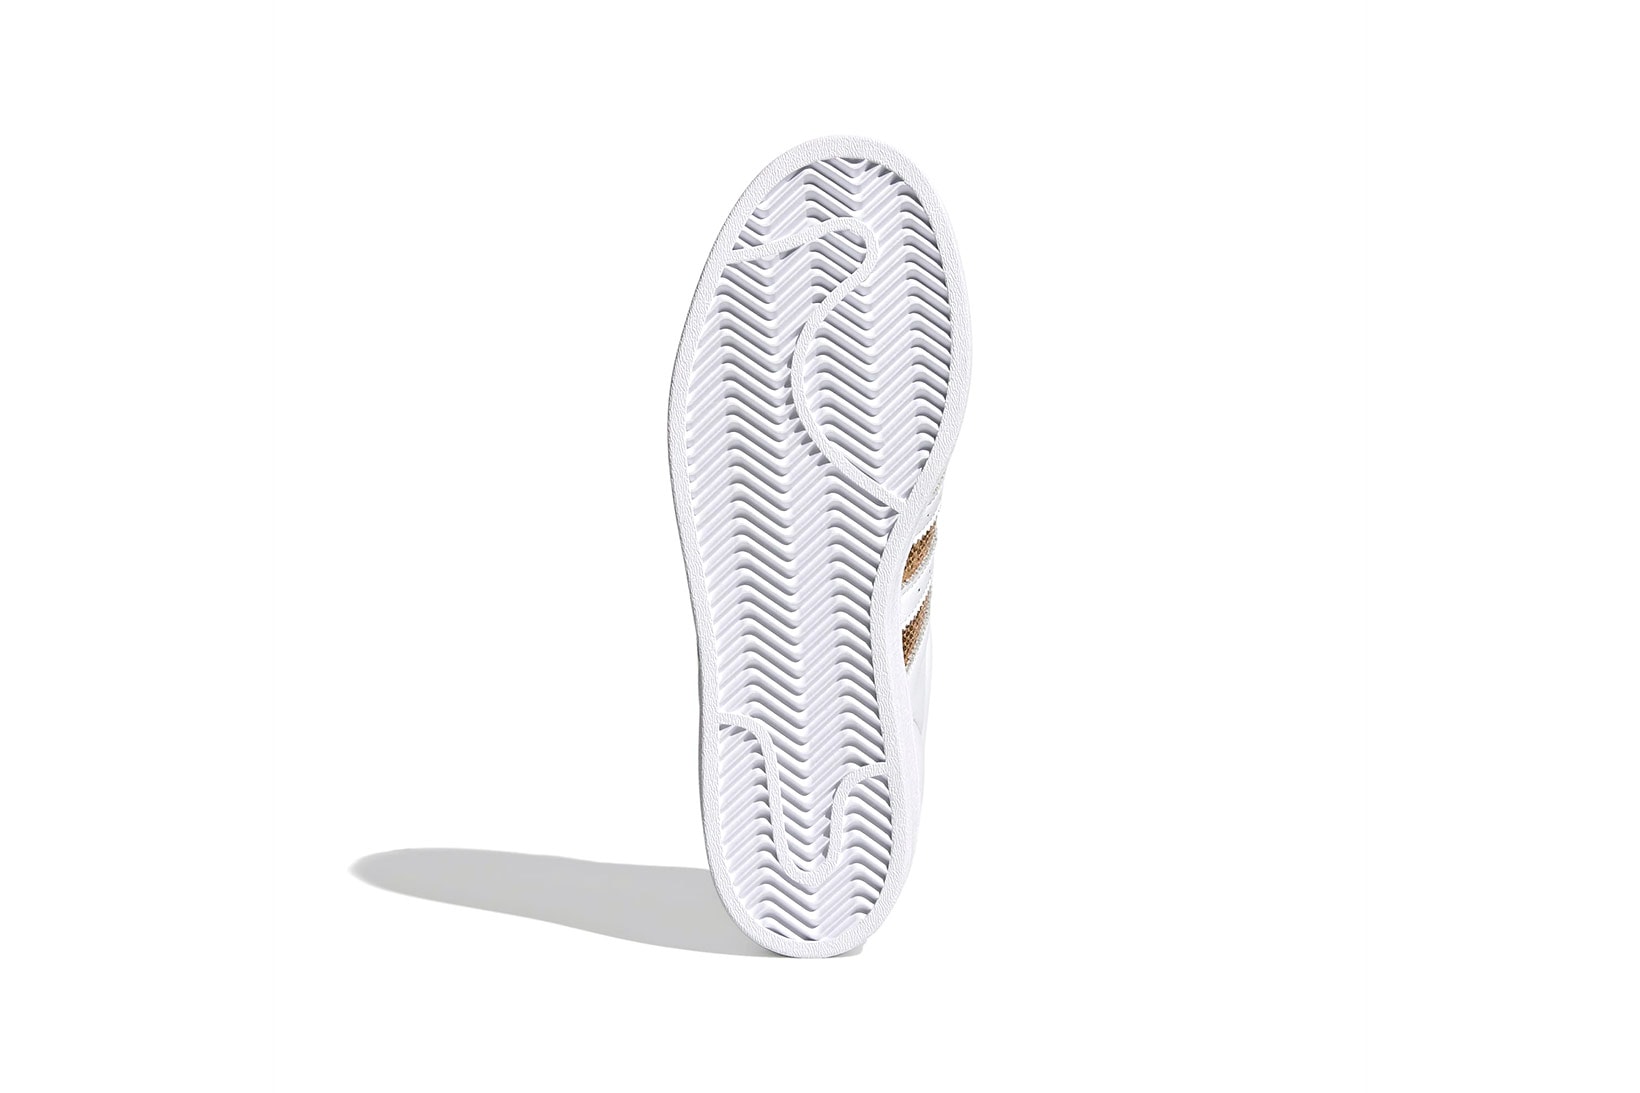 adidas originals superstar womens sneakers metallic gold sequins white colorway sneakerhead footwear shoes sole